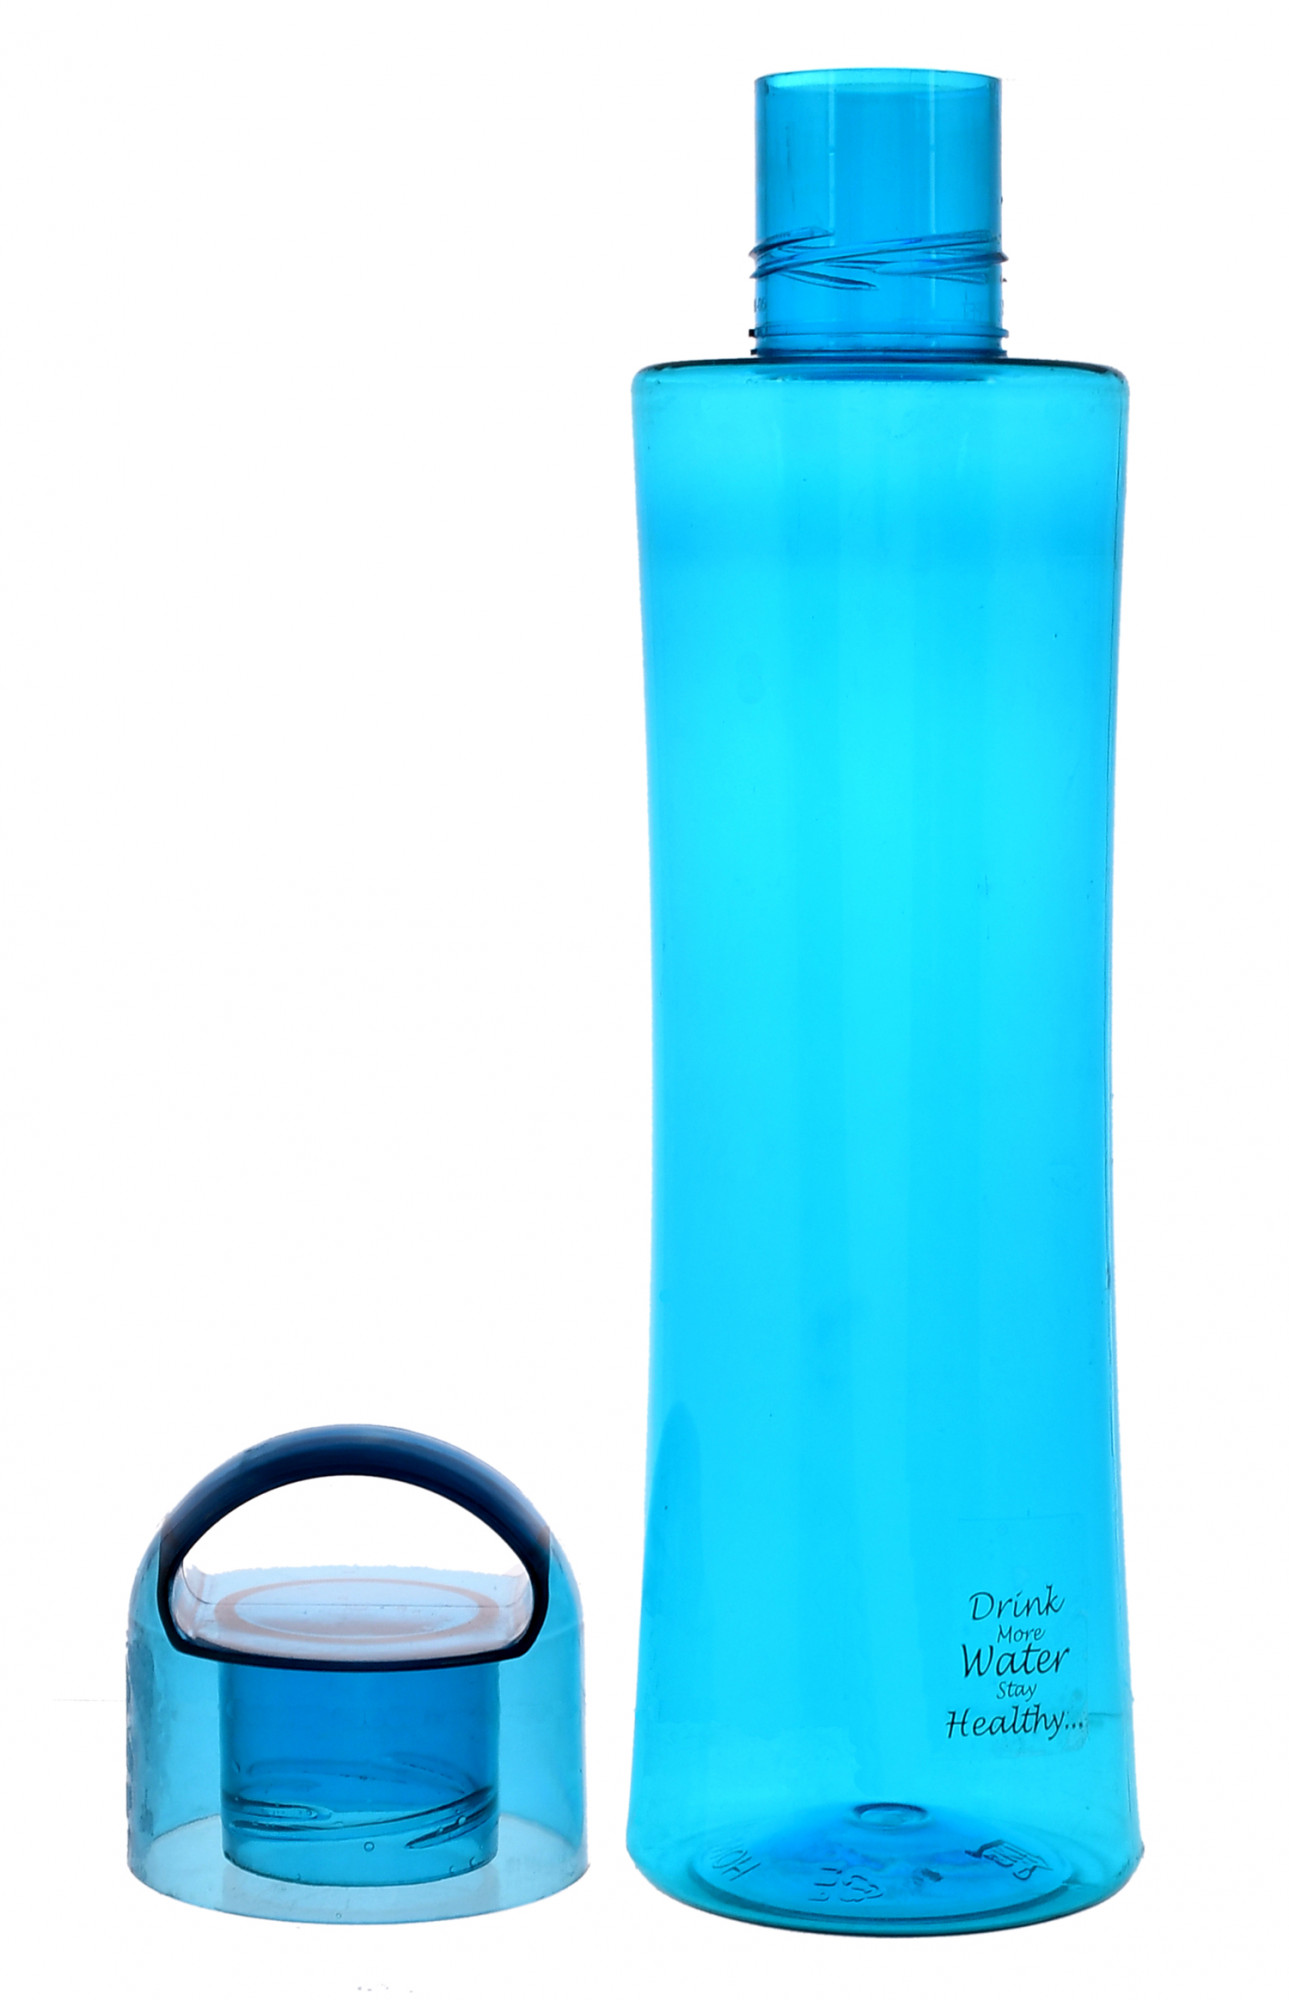 Kuber Industries Unbreakable BPA & Leak Free Plastic Water Bottle- 1 Litre, Pack of 3 (Red & Blue & Green)